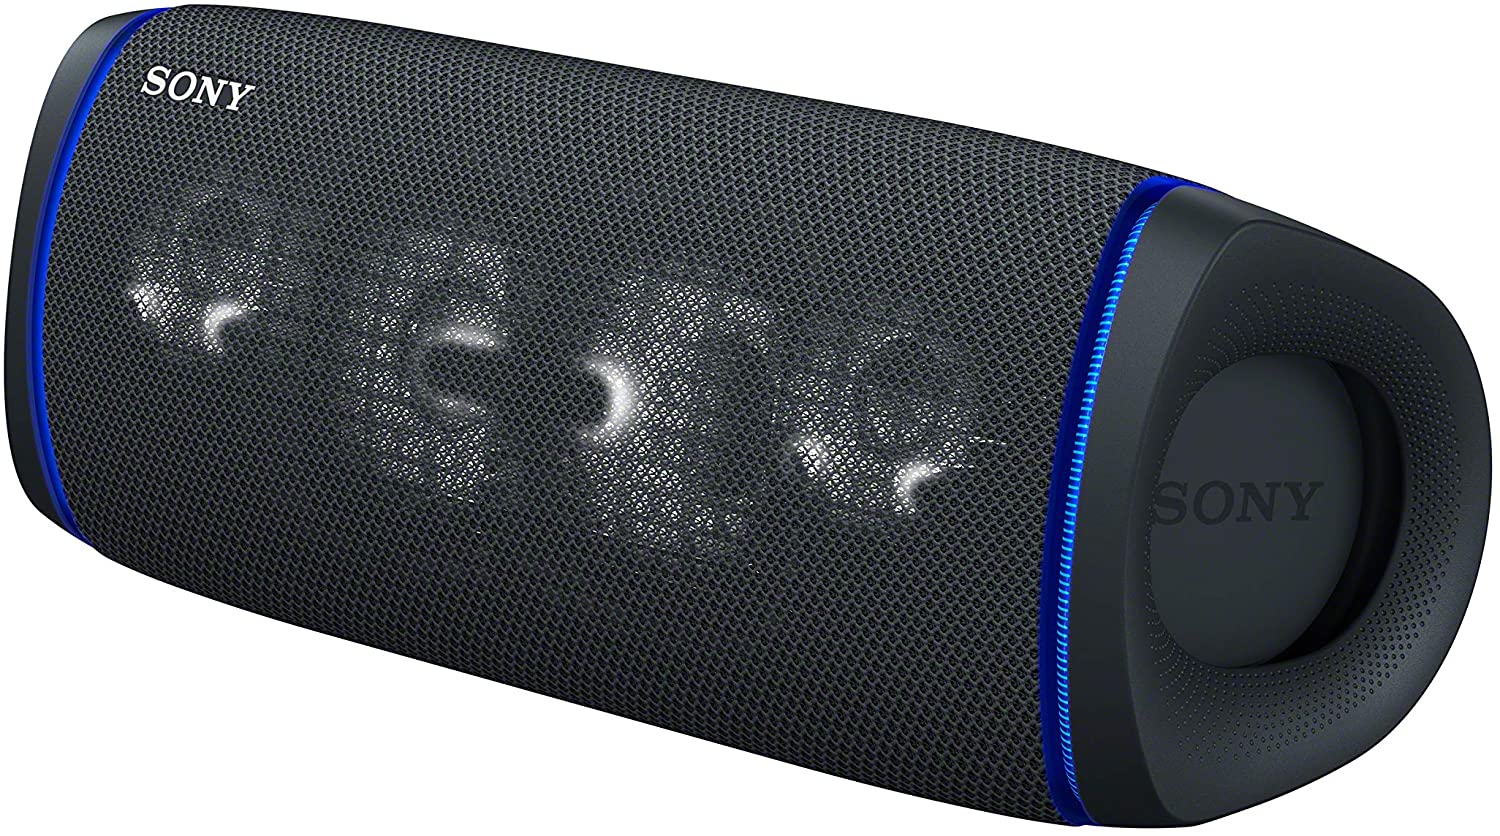 Sony SRS-XB43 Extra Bass Wireless Waterproof Portable Bluetooth Speaker - Black (Certified Refurbished)